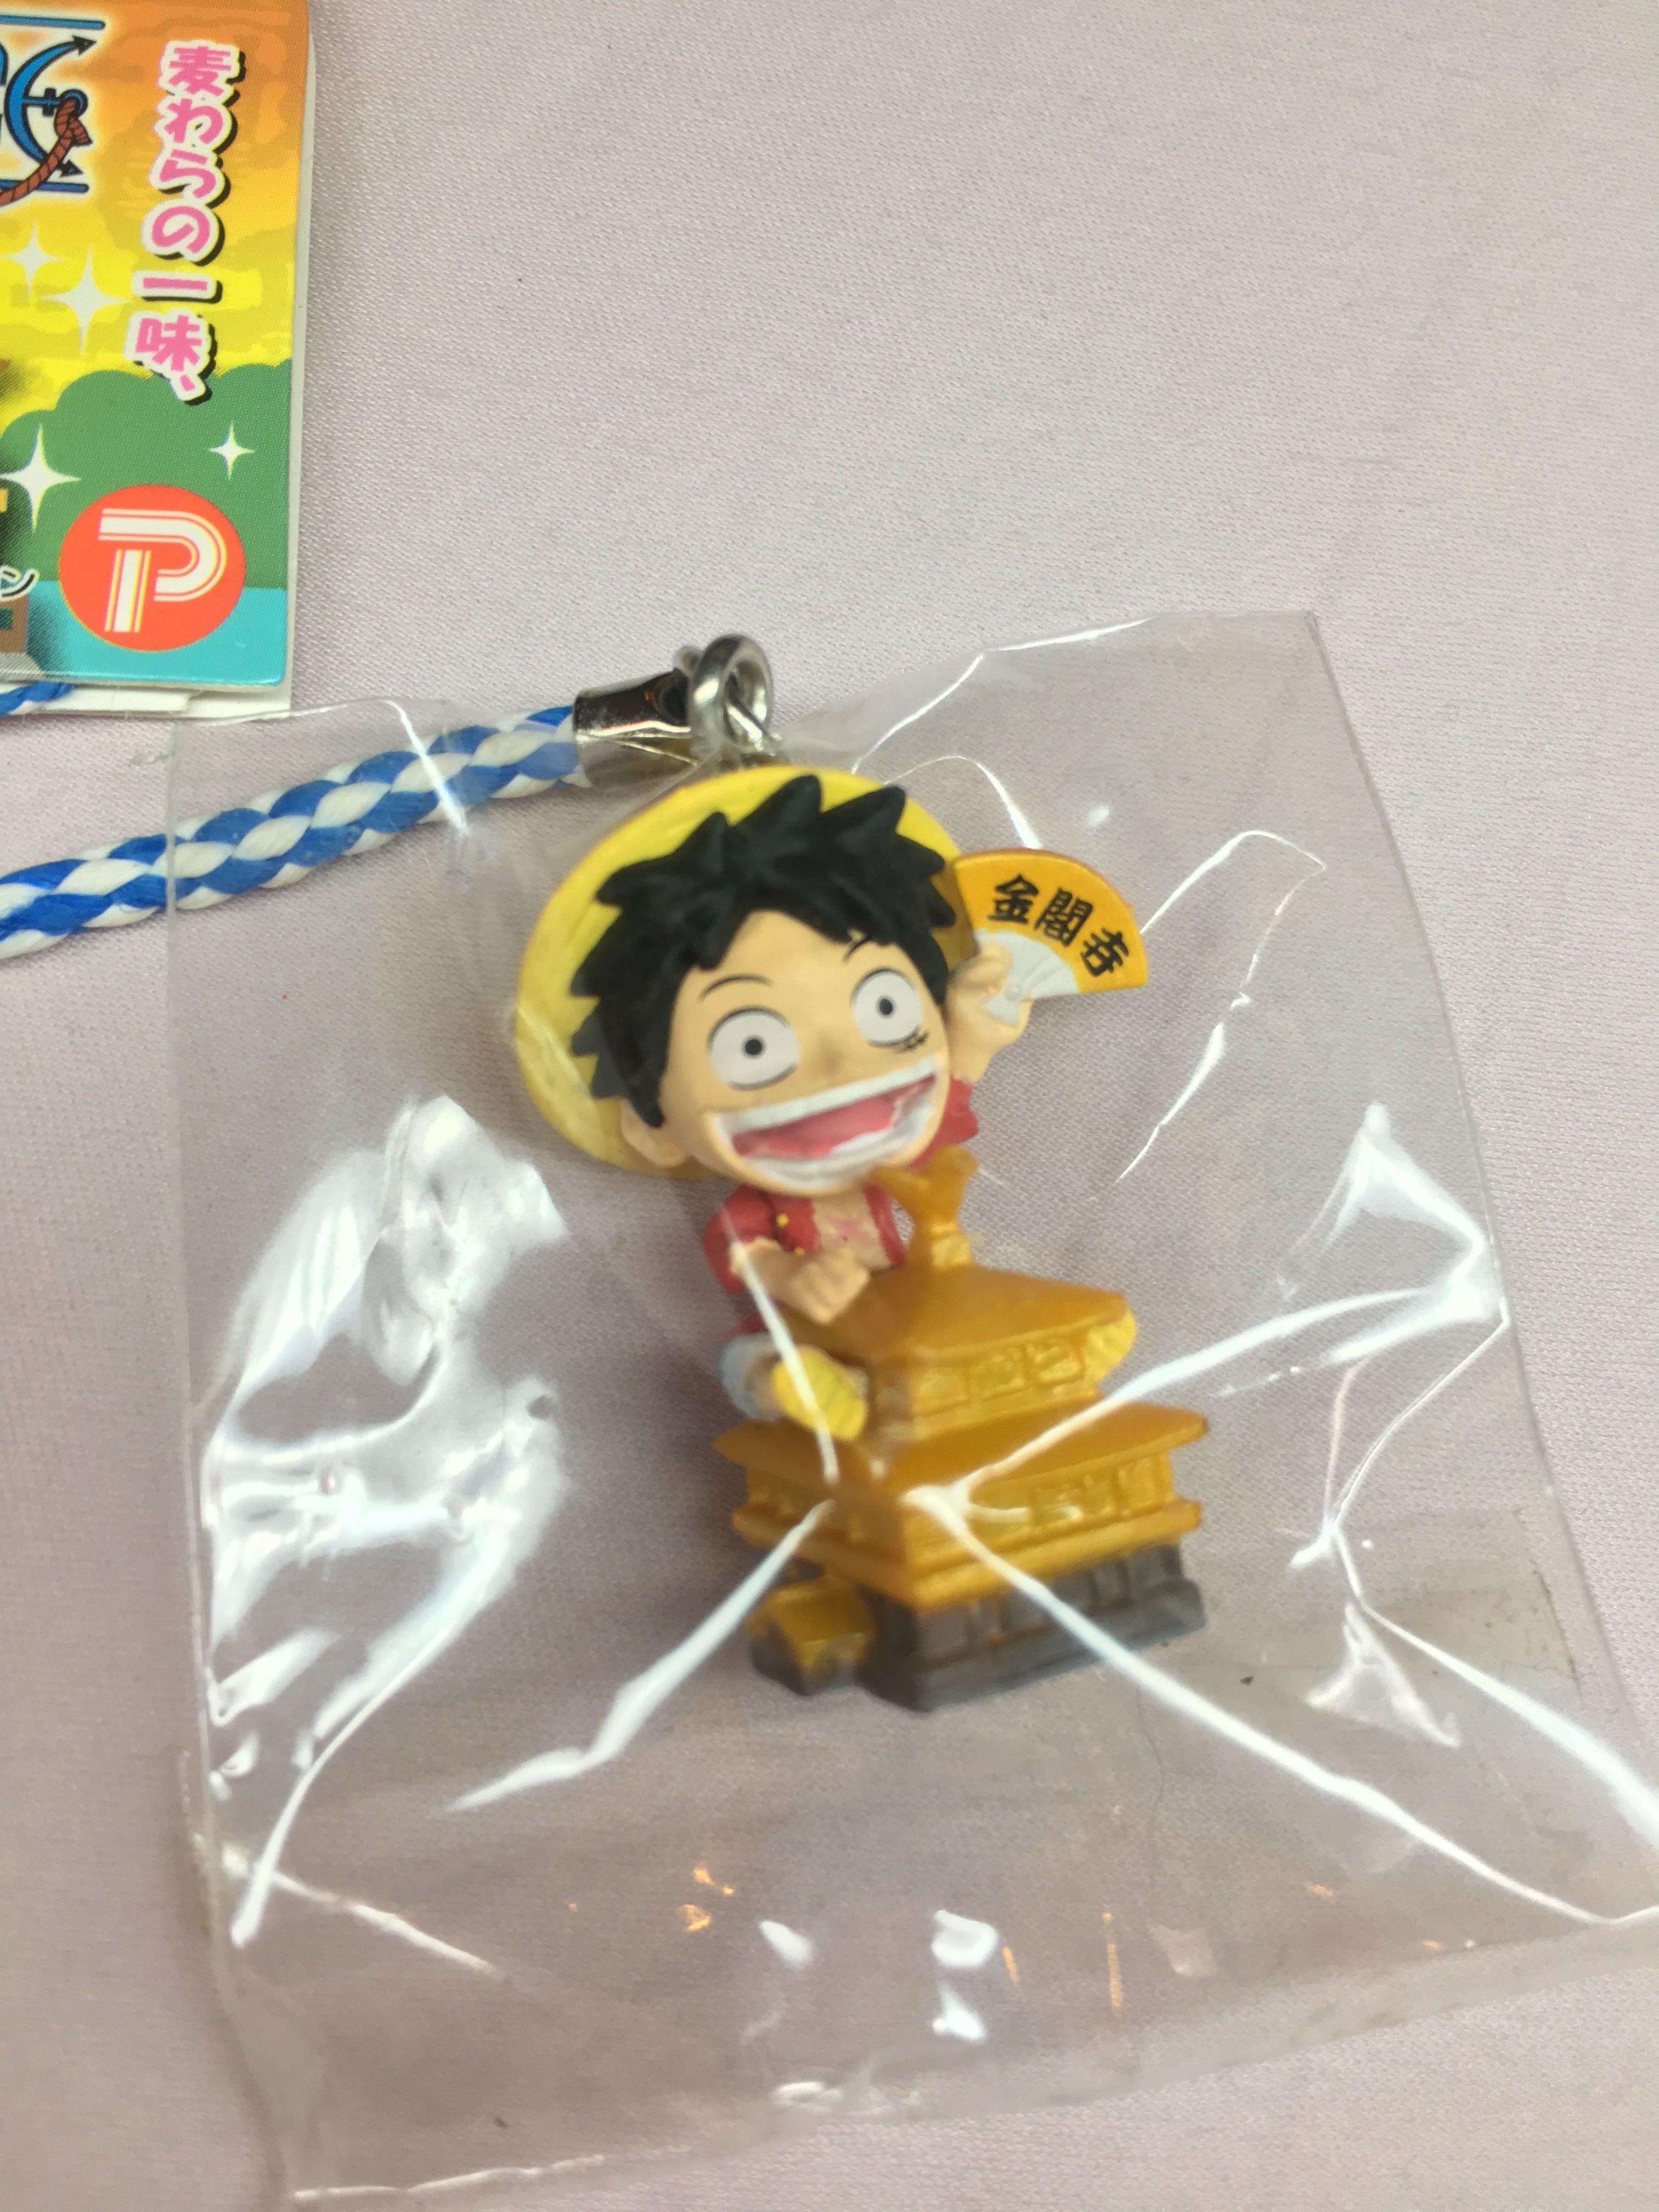 One piece - Luffy. On Japan (kyoto) golden pavillion, Hobbies & Toys ...